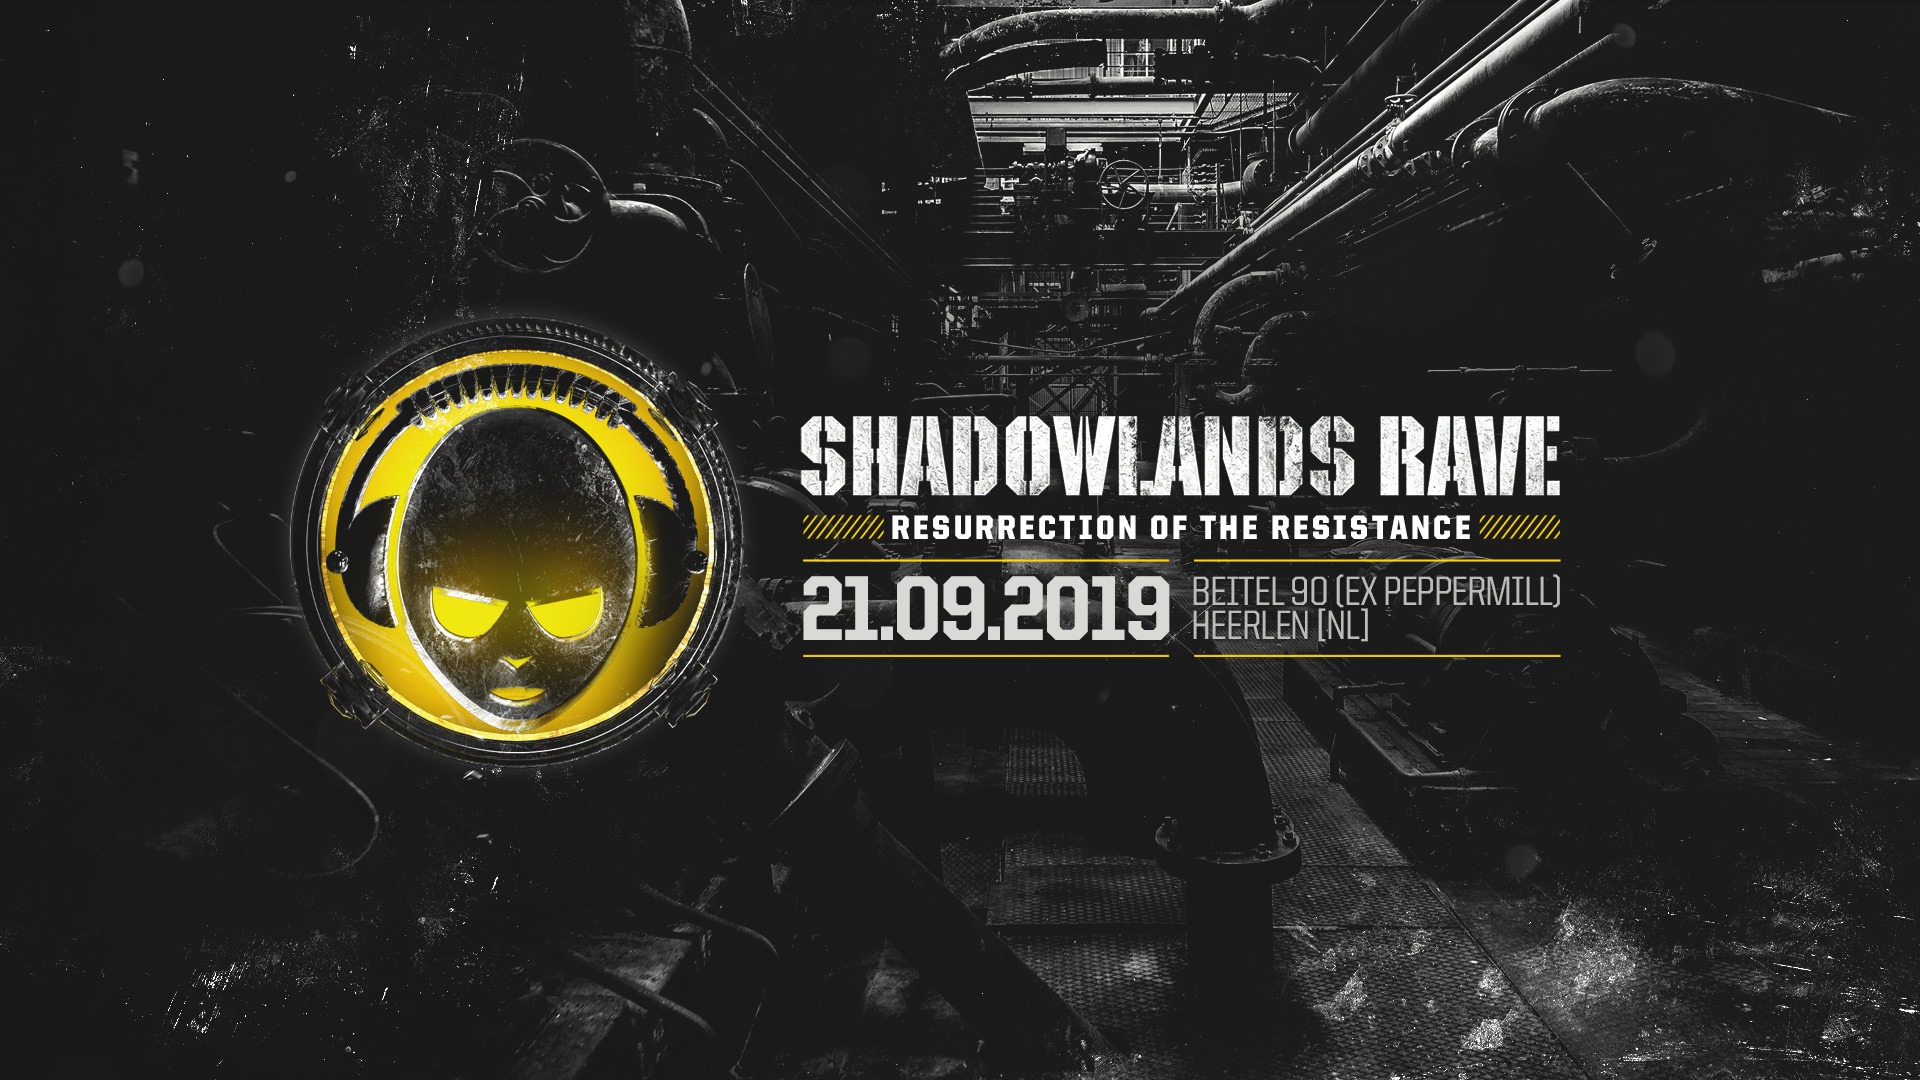 Shadowlands Rave 2019